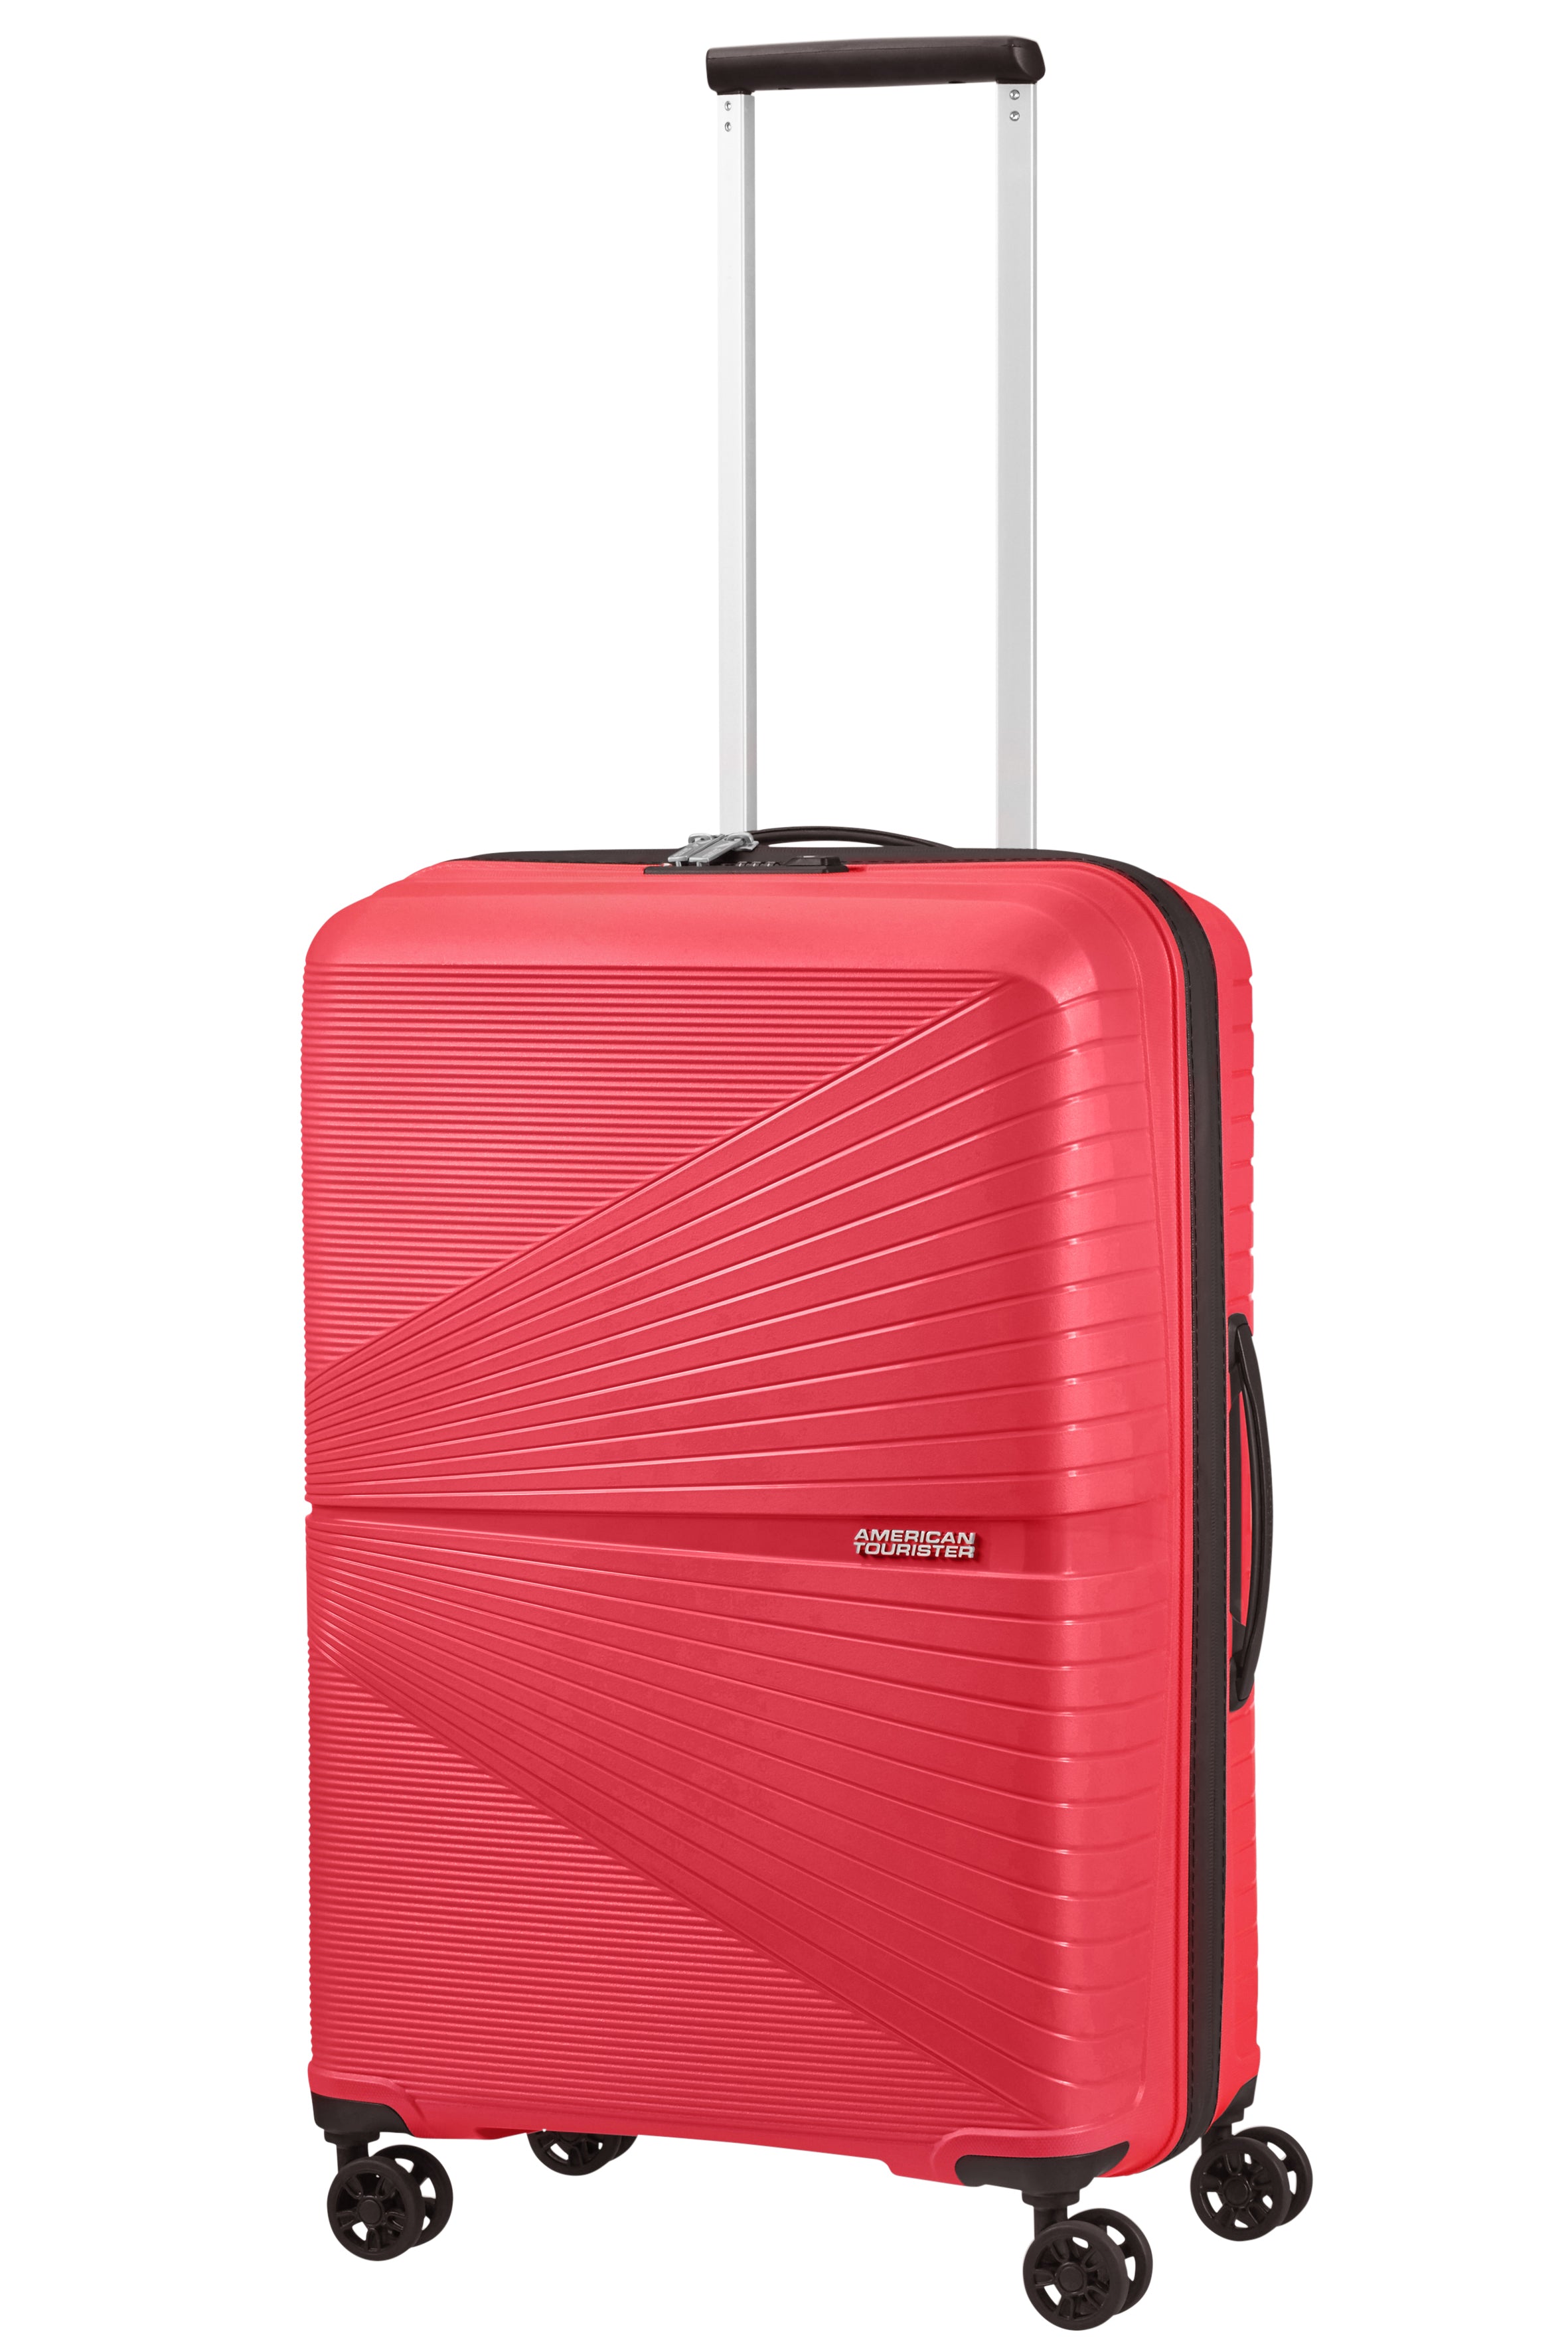 American Tourister - Airconic 67cm Medium 4 Wheel Hard Suitcase - Paradise Pink